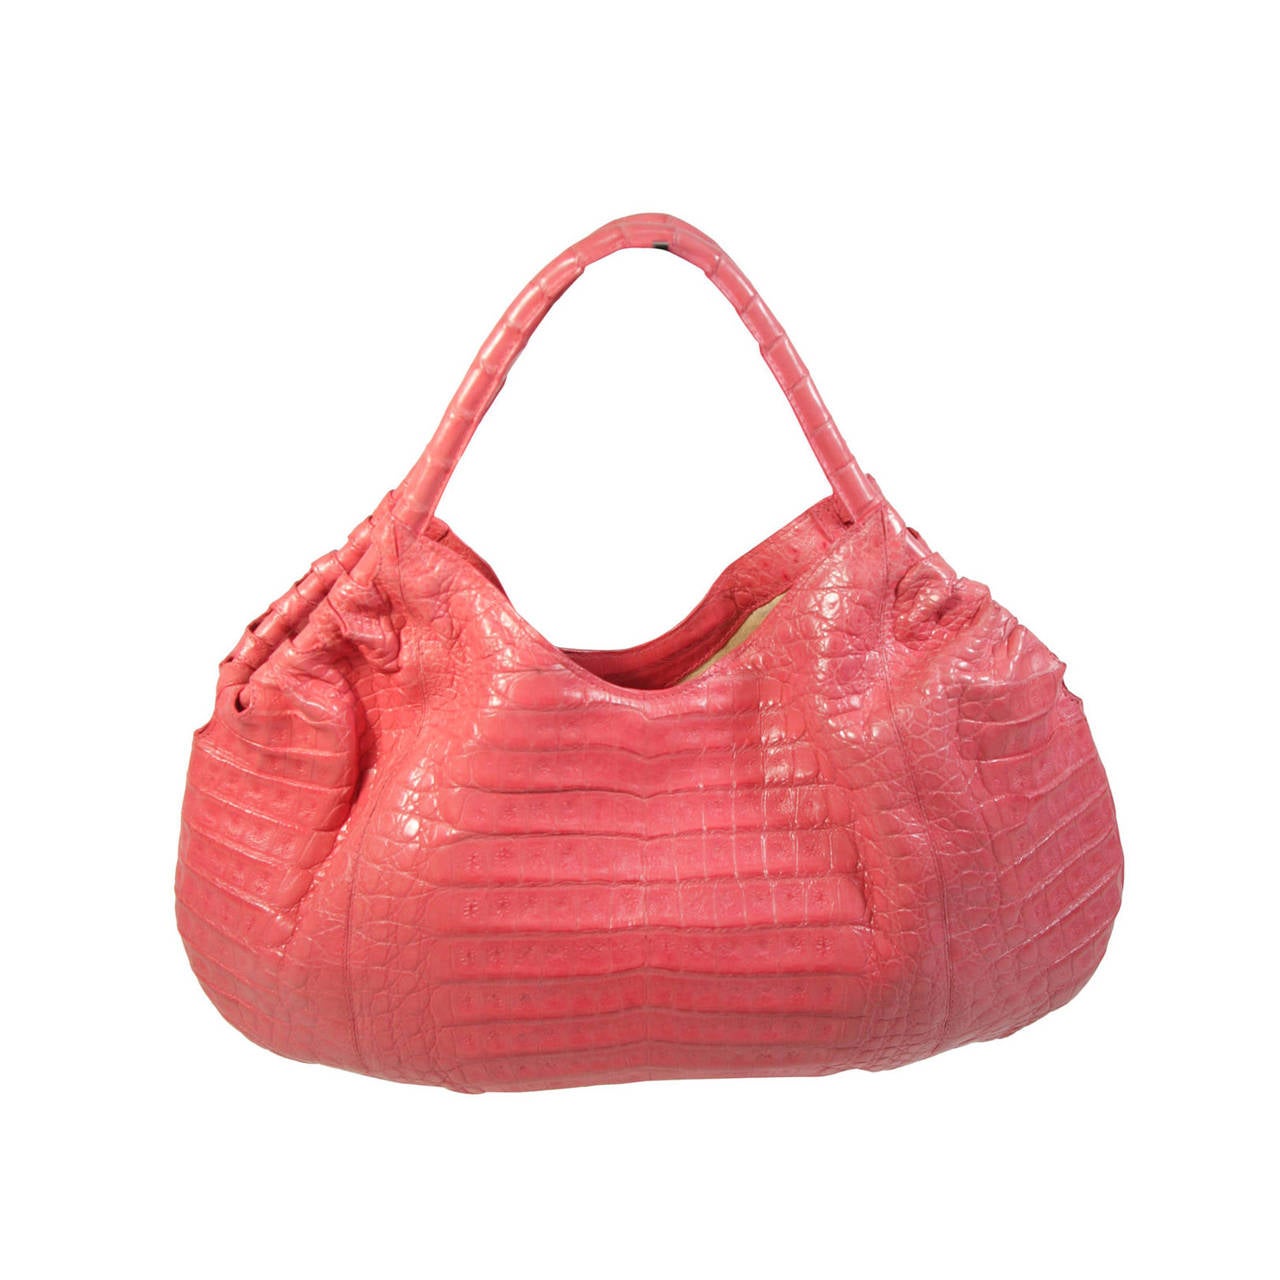 Nancy Gonzalez Pink Crocodile Double Strap Handbag